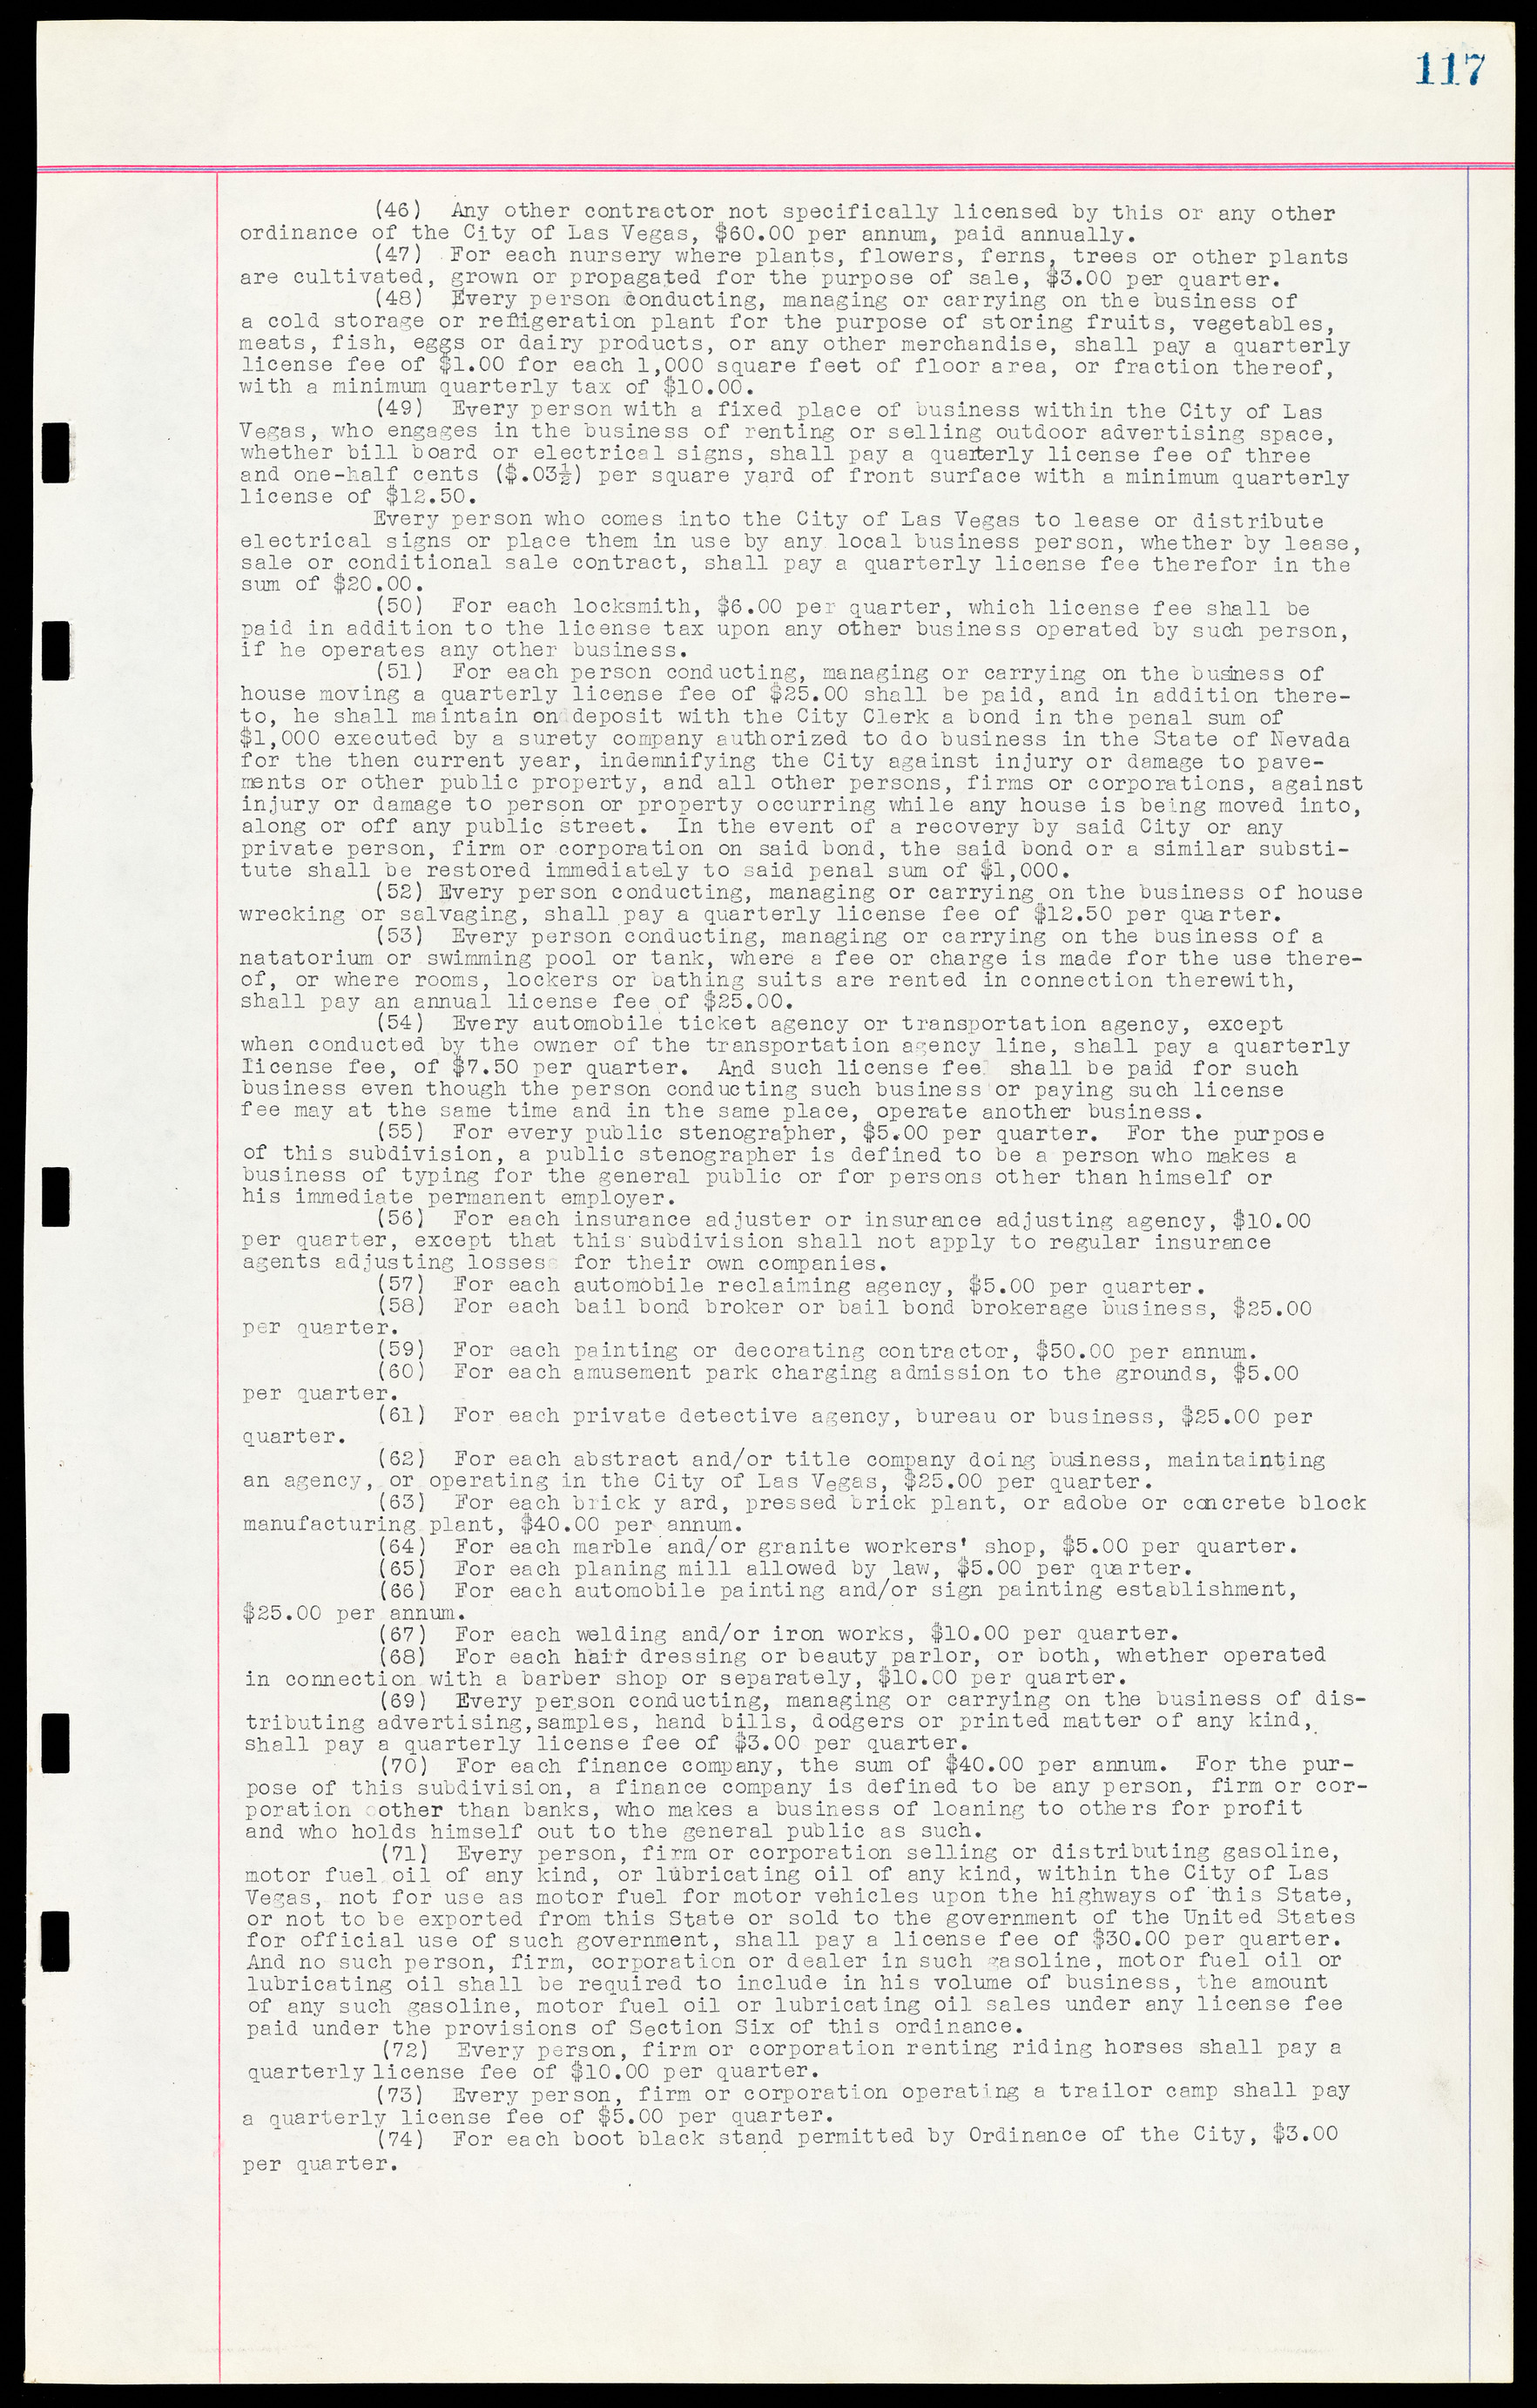 Las Vegas City Ordinances, March 31, 1933 to October 25, 1950, lvc000014-137